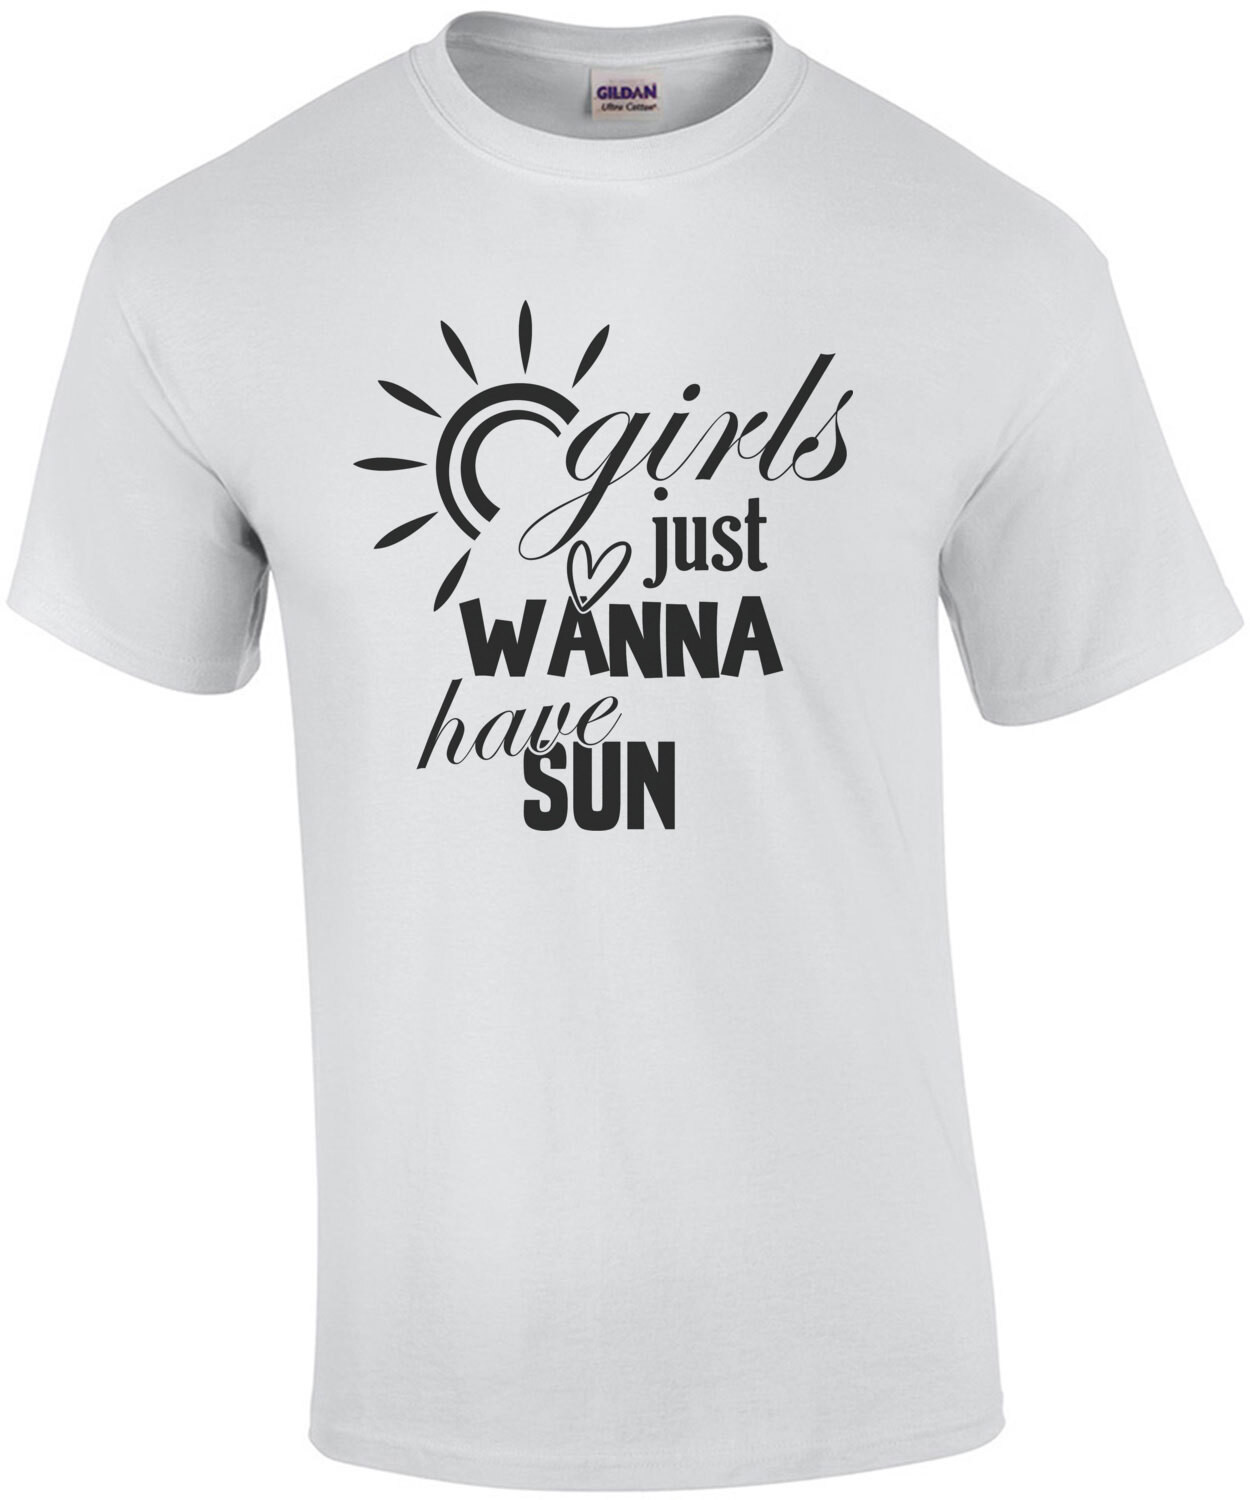 Girls just wanna have sun - ladies t-shirt